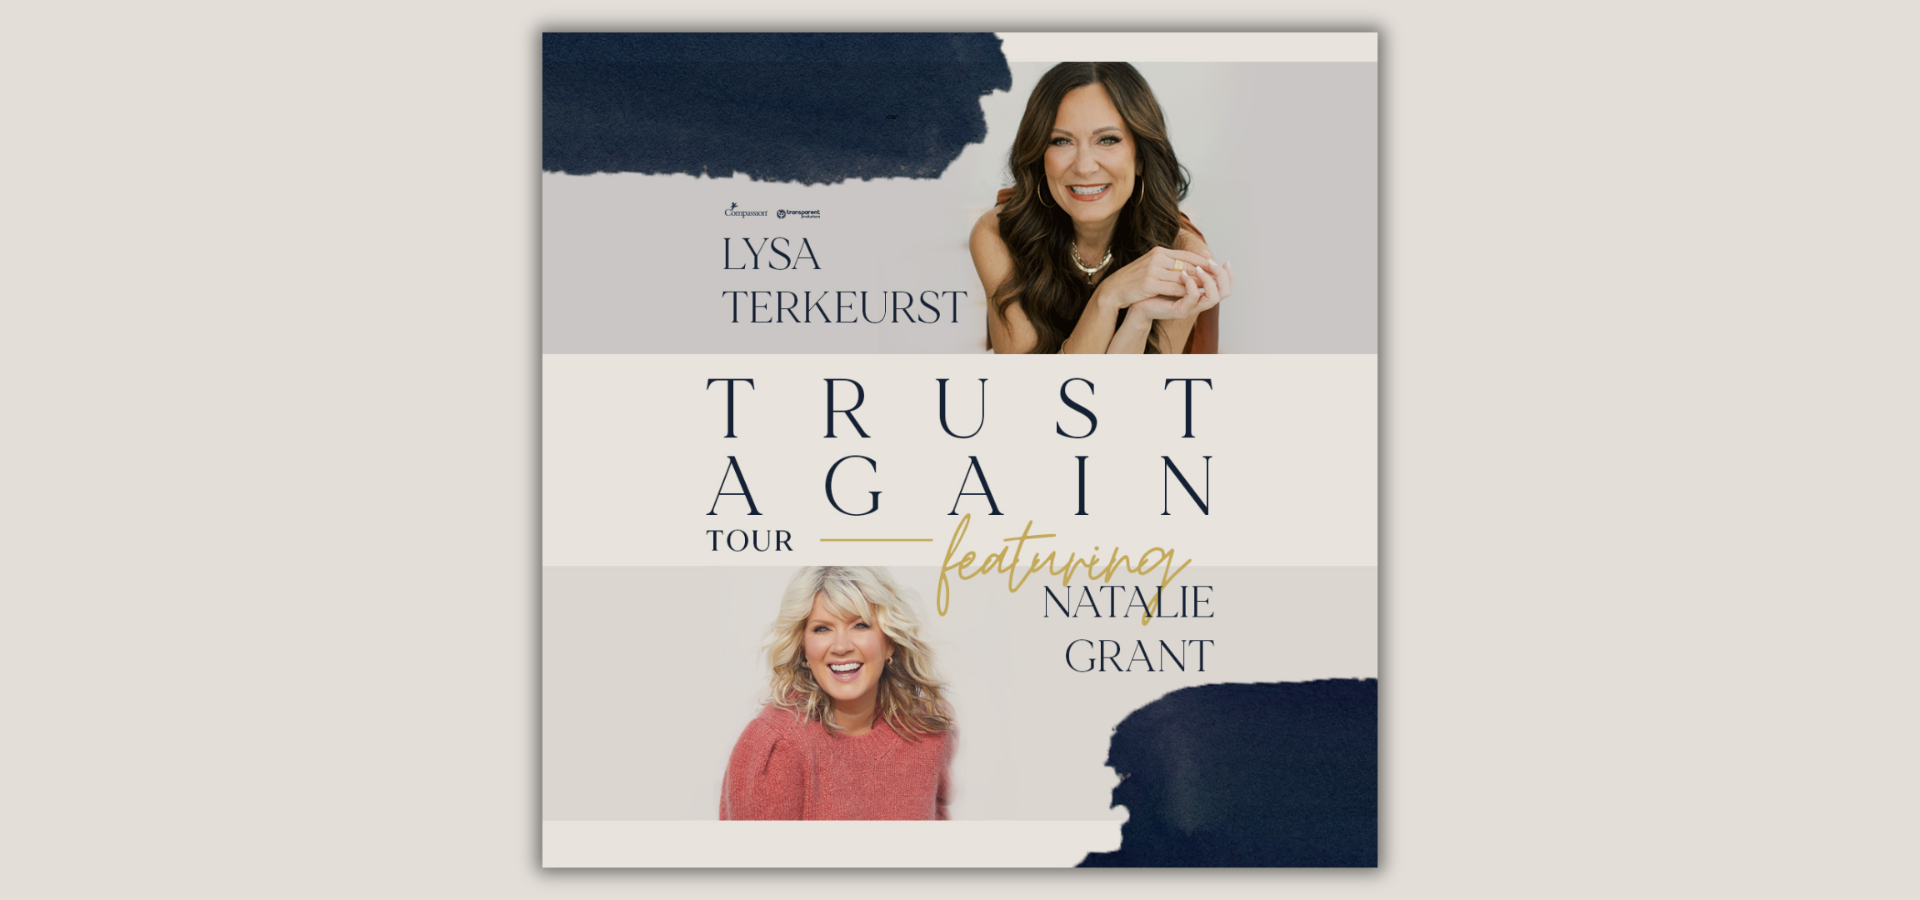 Lysa Terkeurst Announces The Trust Again Tour Featuring Natalie Grant